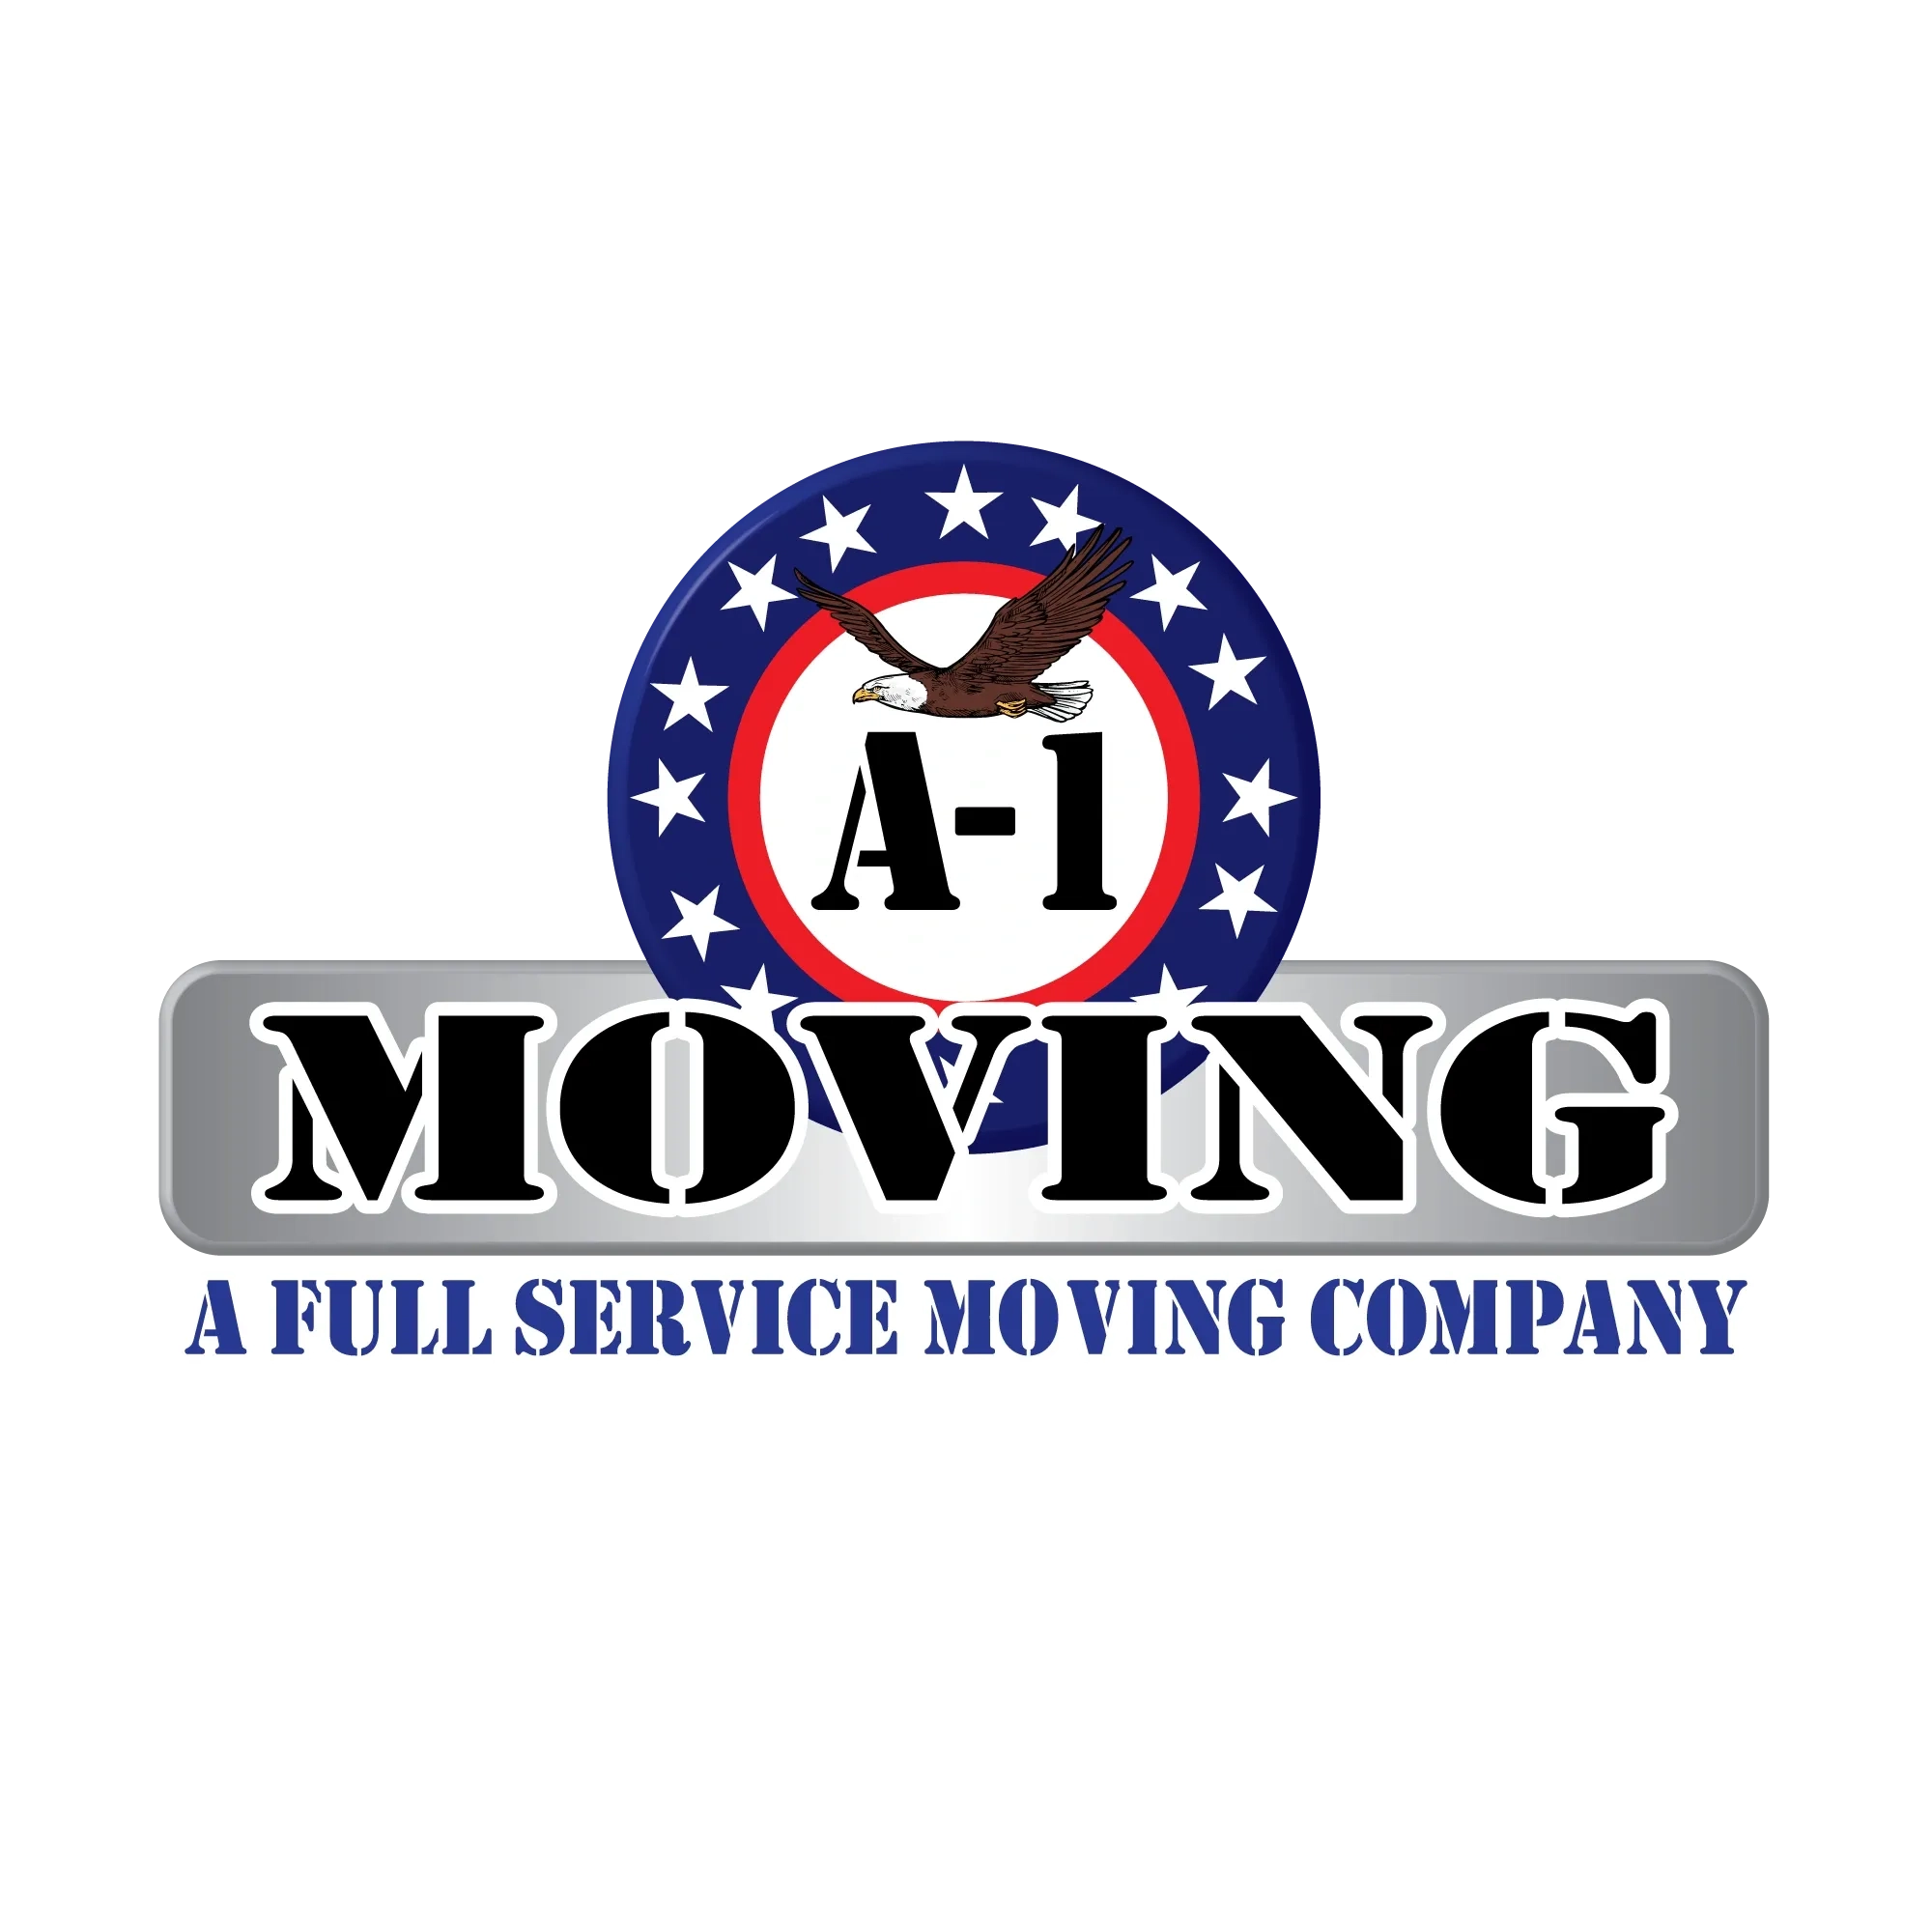 A-1 Moving Logo